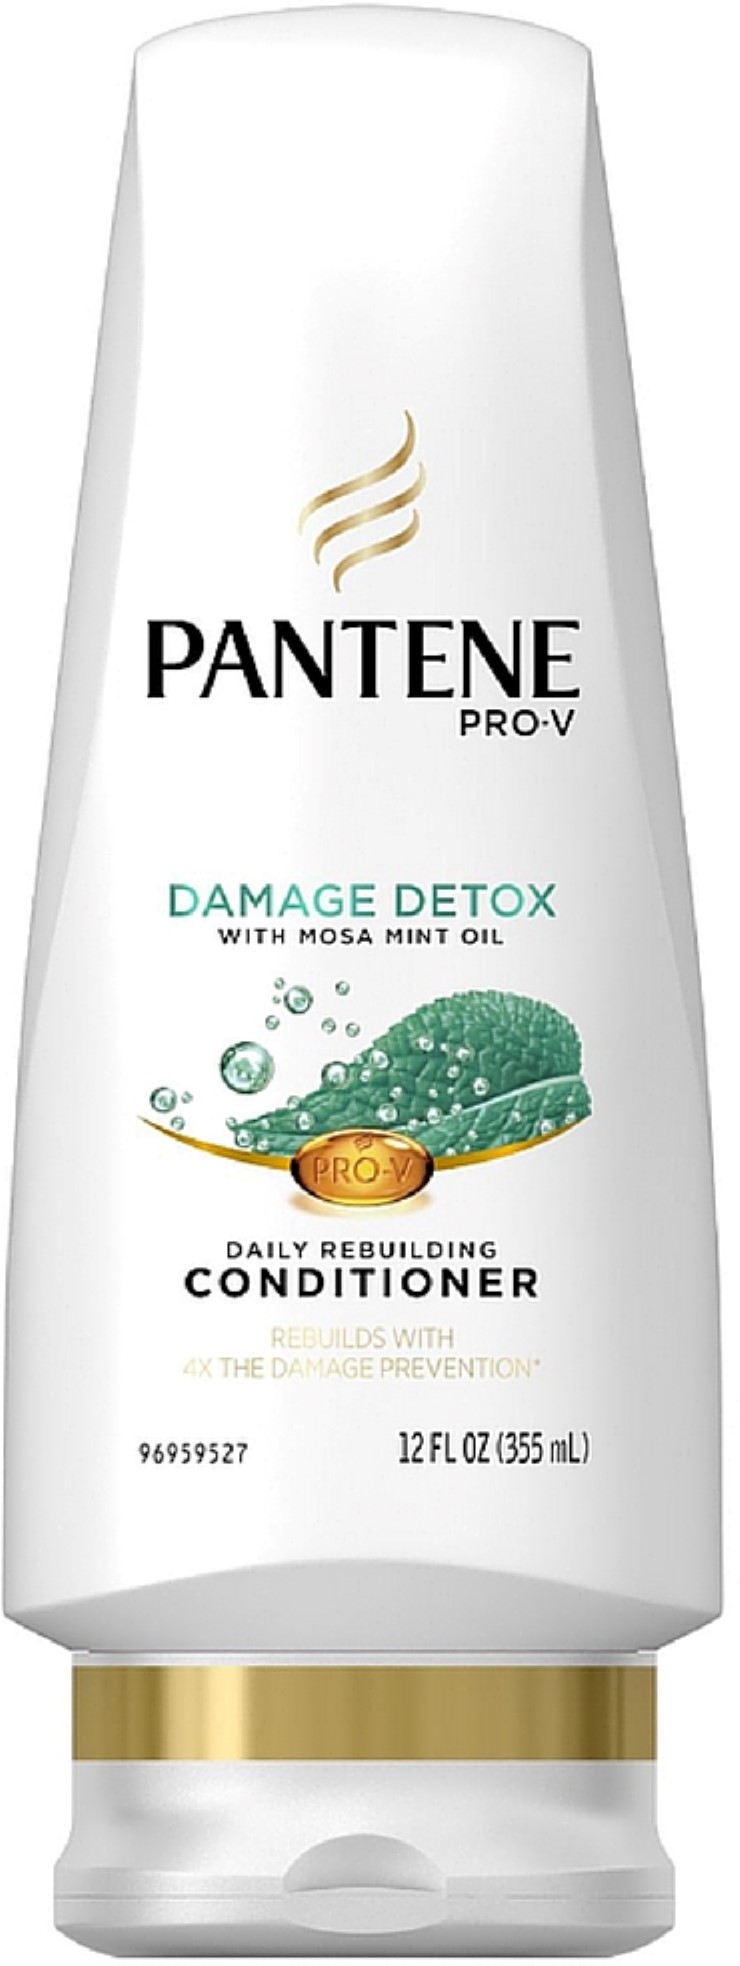 Pantene Pro-V Damage Detox Daily Rebuilding Conditioner 12 oz (Pack of 6) - image 1 of 1